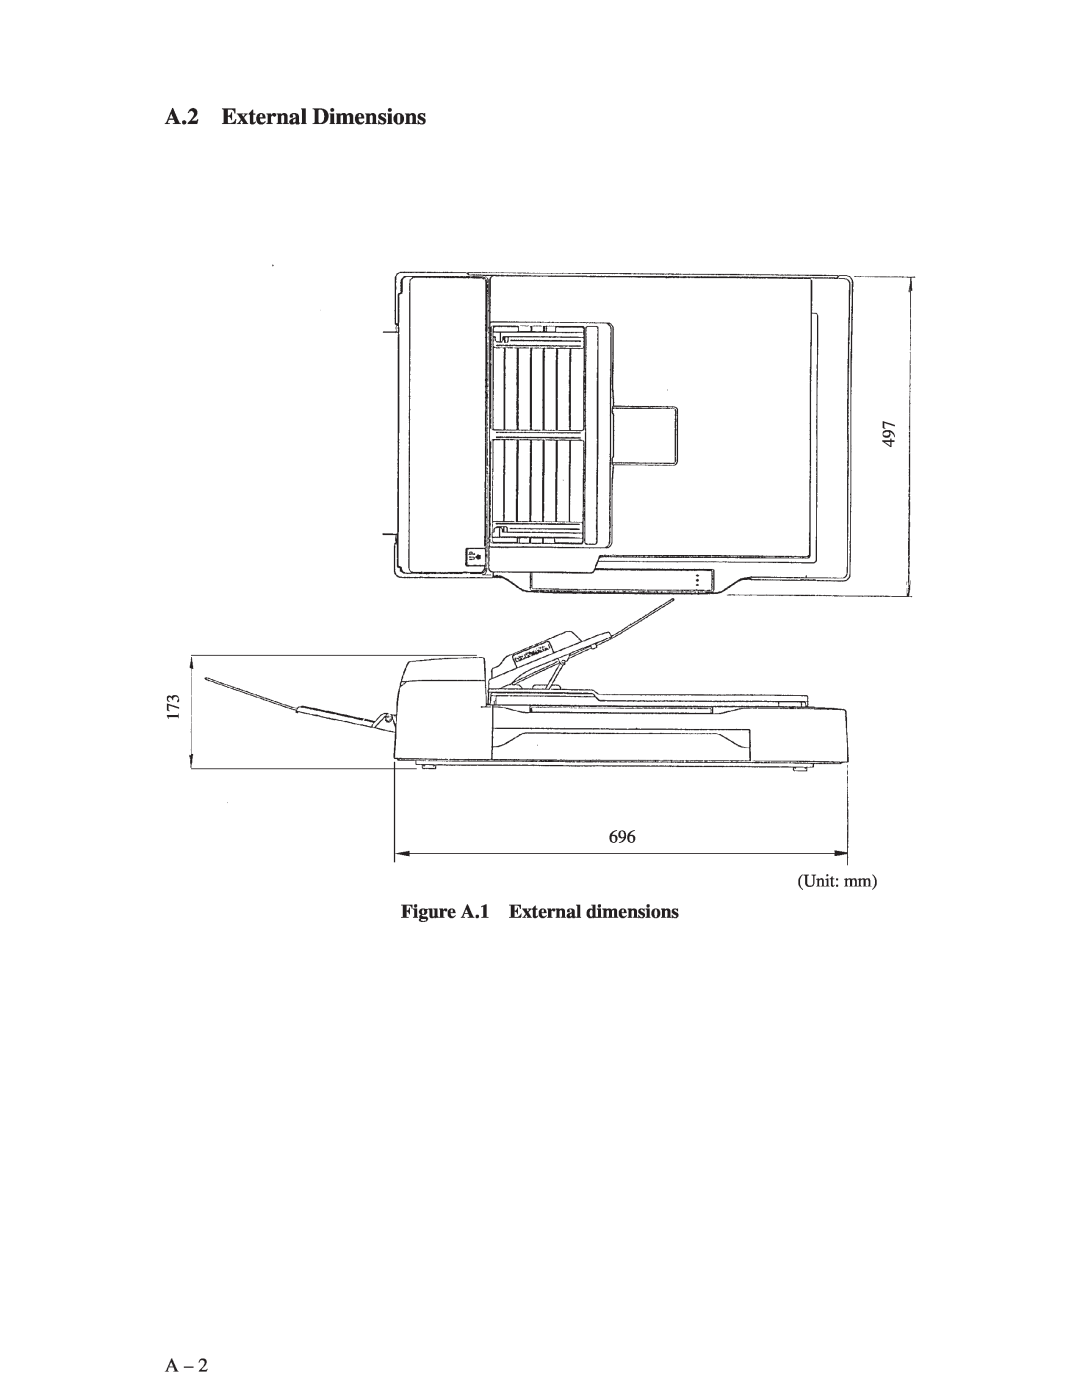 Fujitsu M3096GX, M3096EX manual A.2 External Dimensions, Figure A.1 External dimensions, 497 173 696 Unit mm 